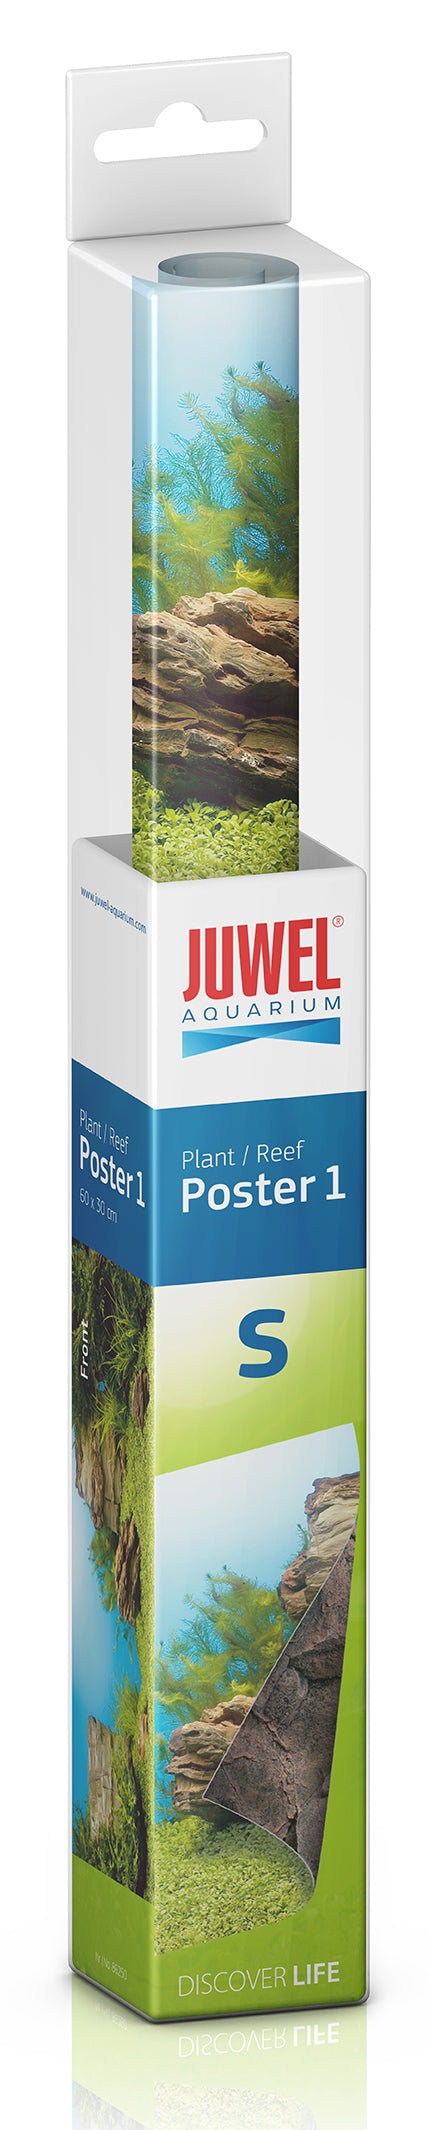 Juwel Aquarium Double Sided Poster 1